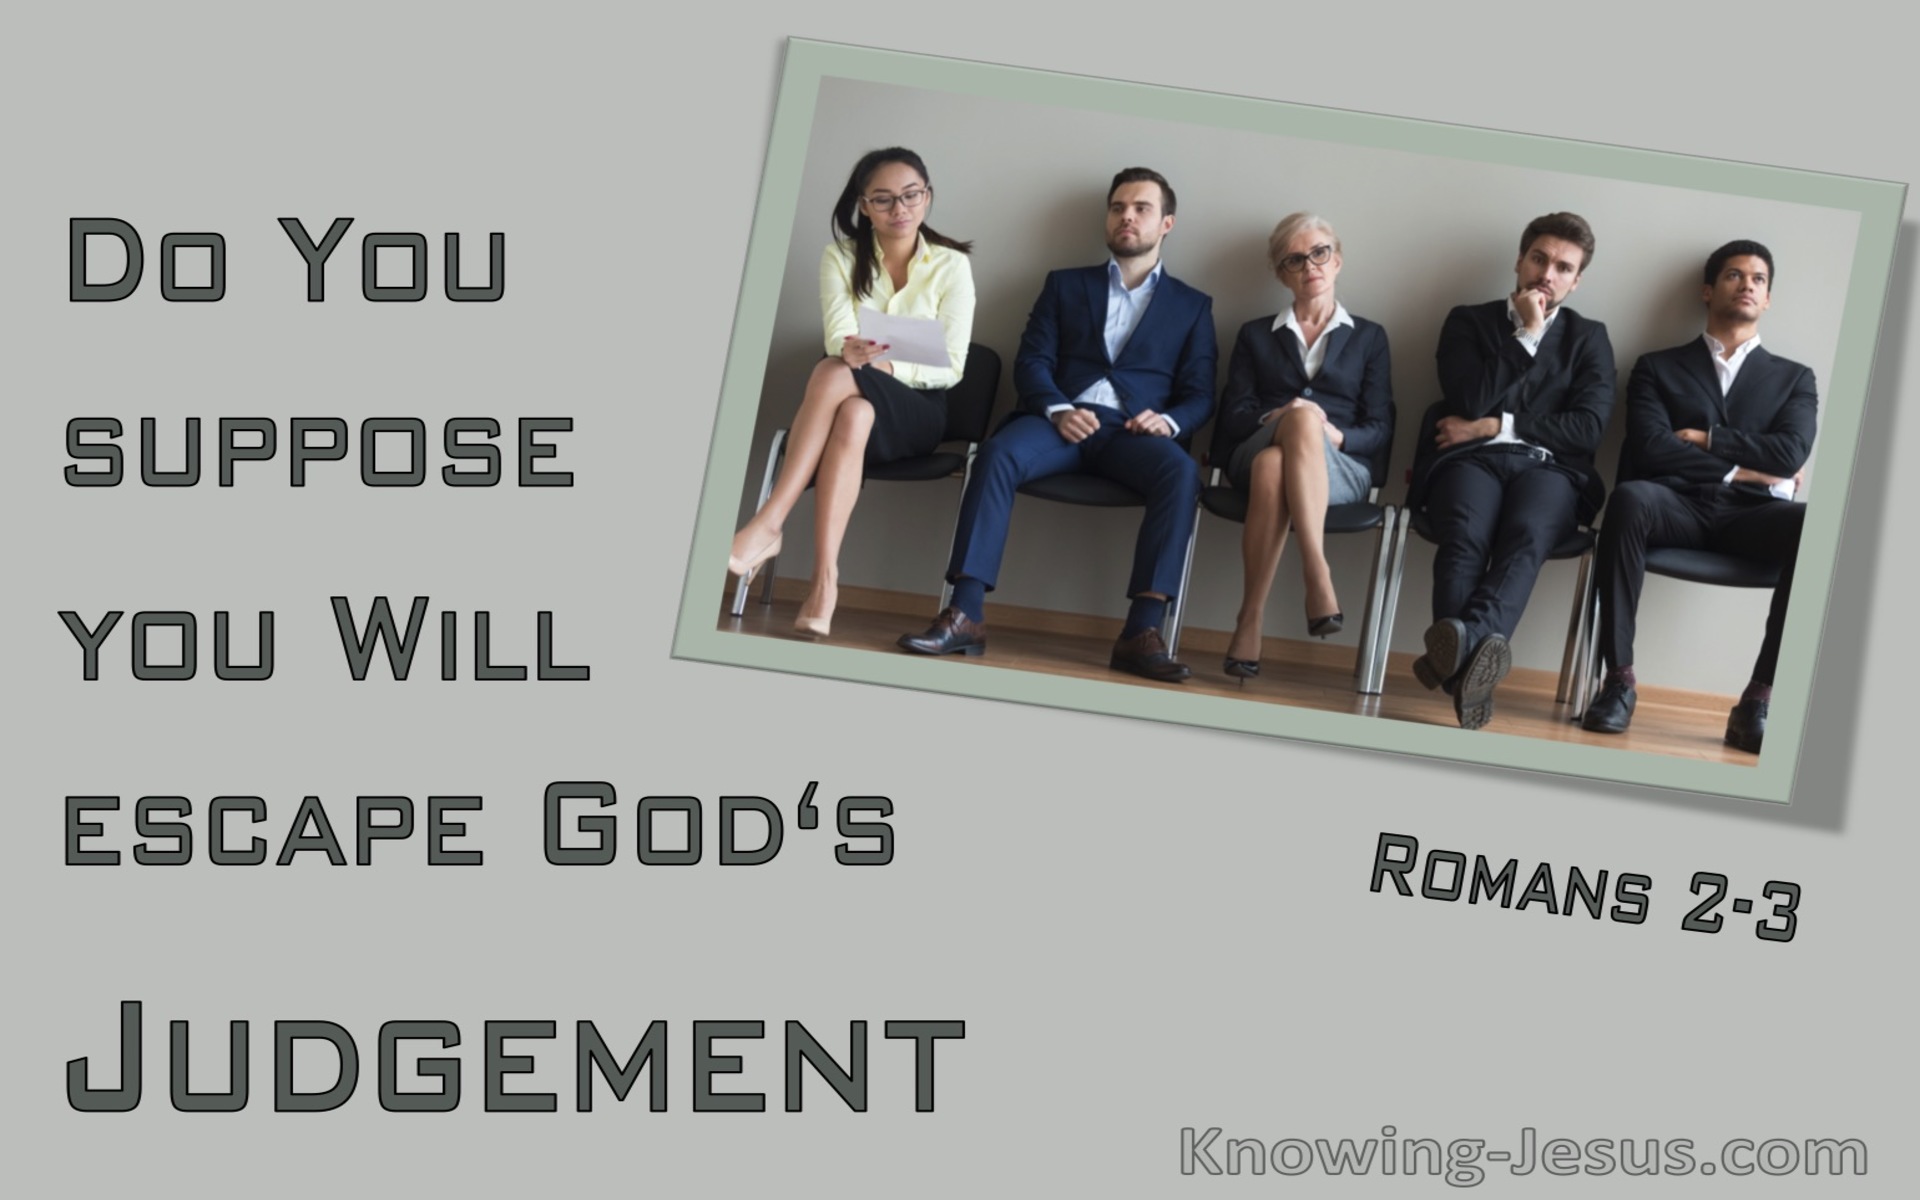 Romans 2:3 Do You Suppose You Will Escape Gods Judgement (sage)